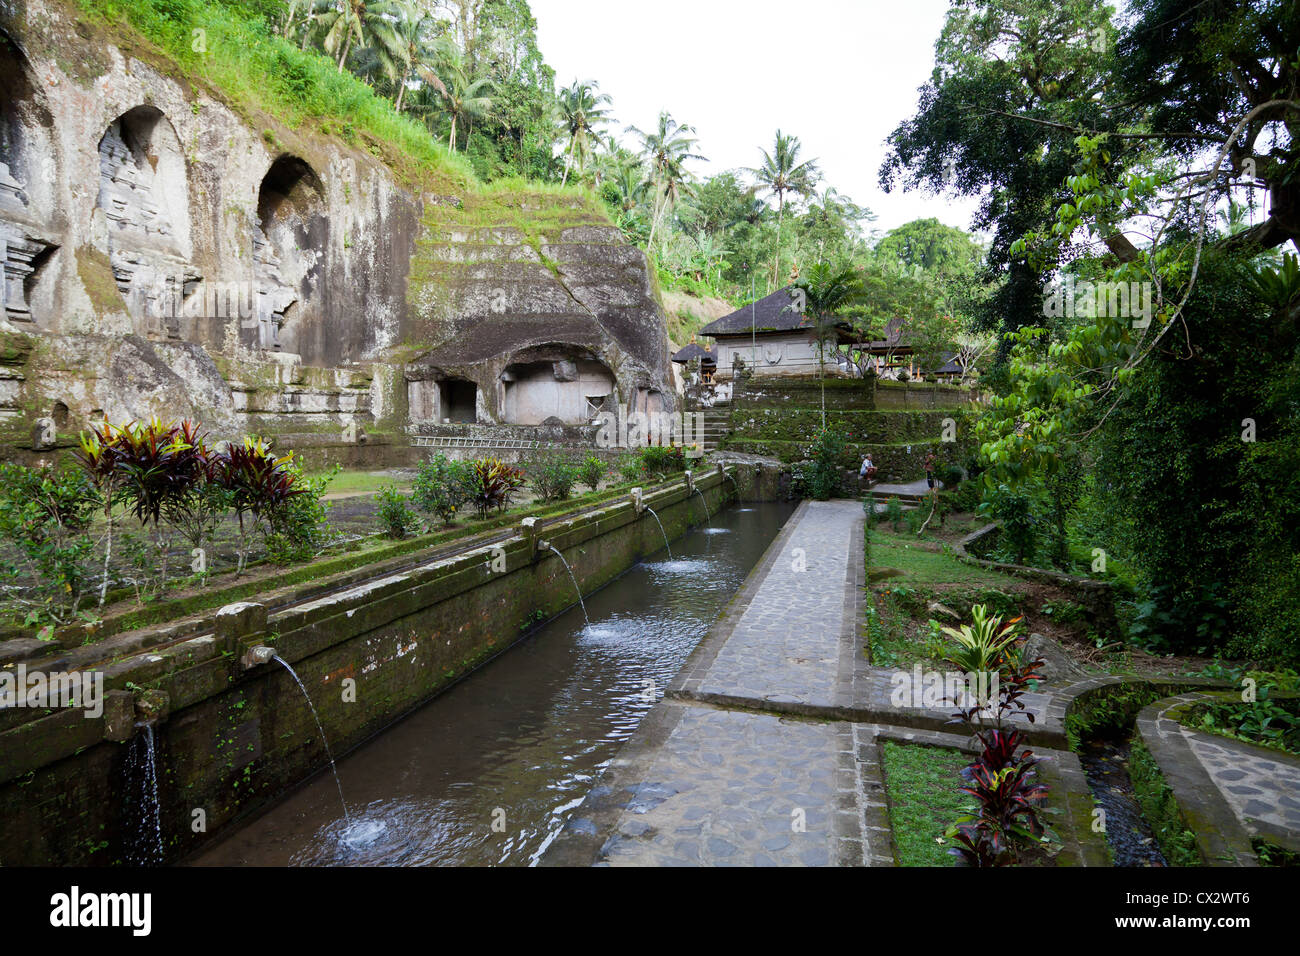 Die Candis Tempel Gunung Kawi auf Bali Stockfoto